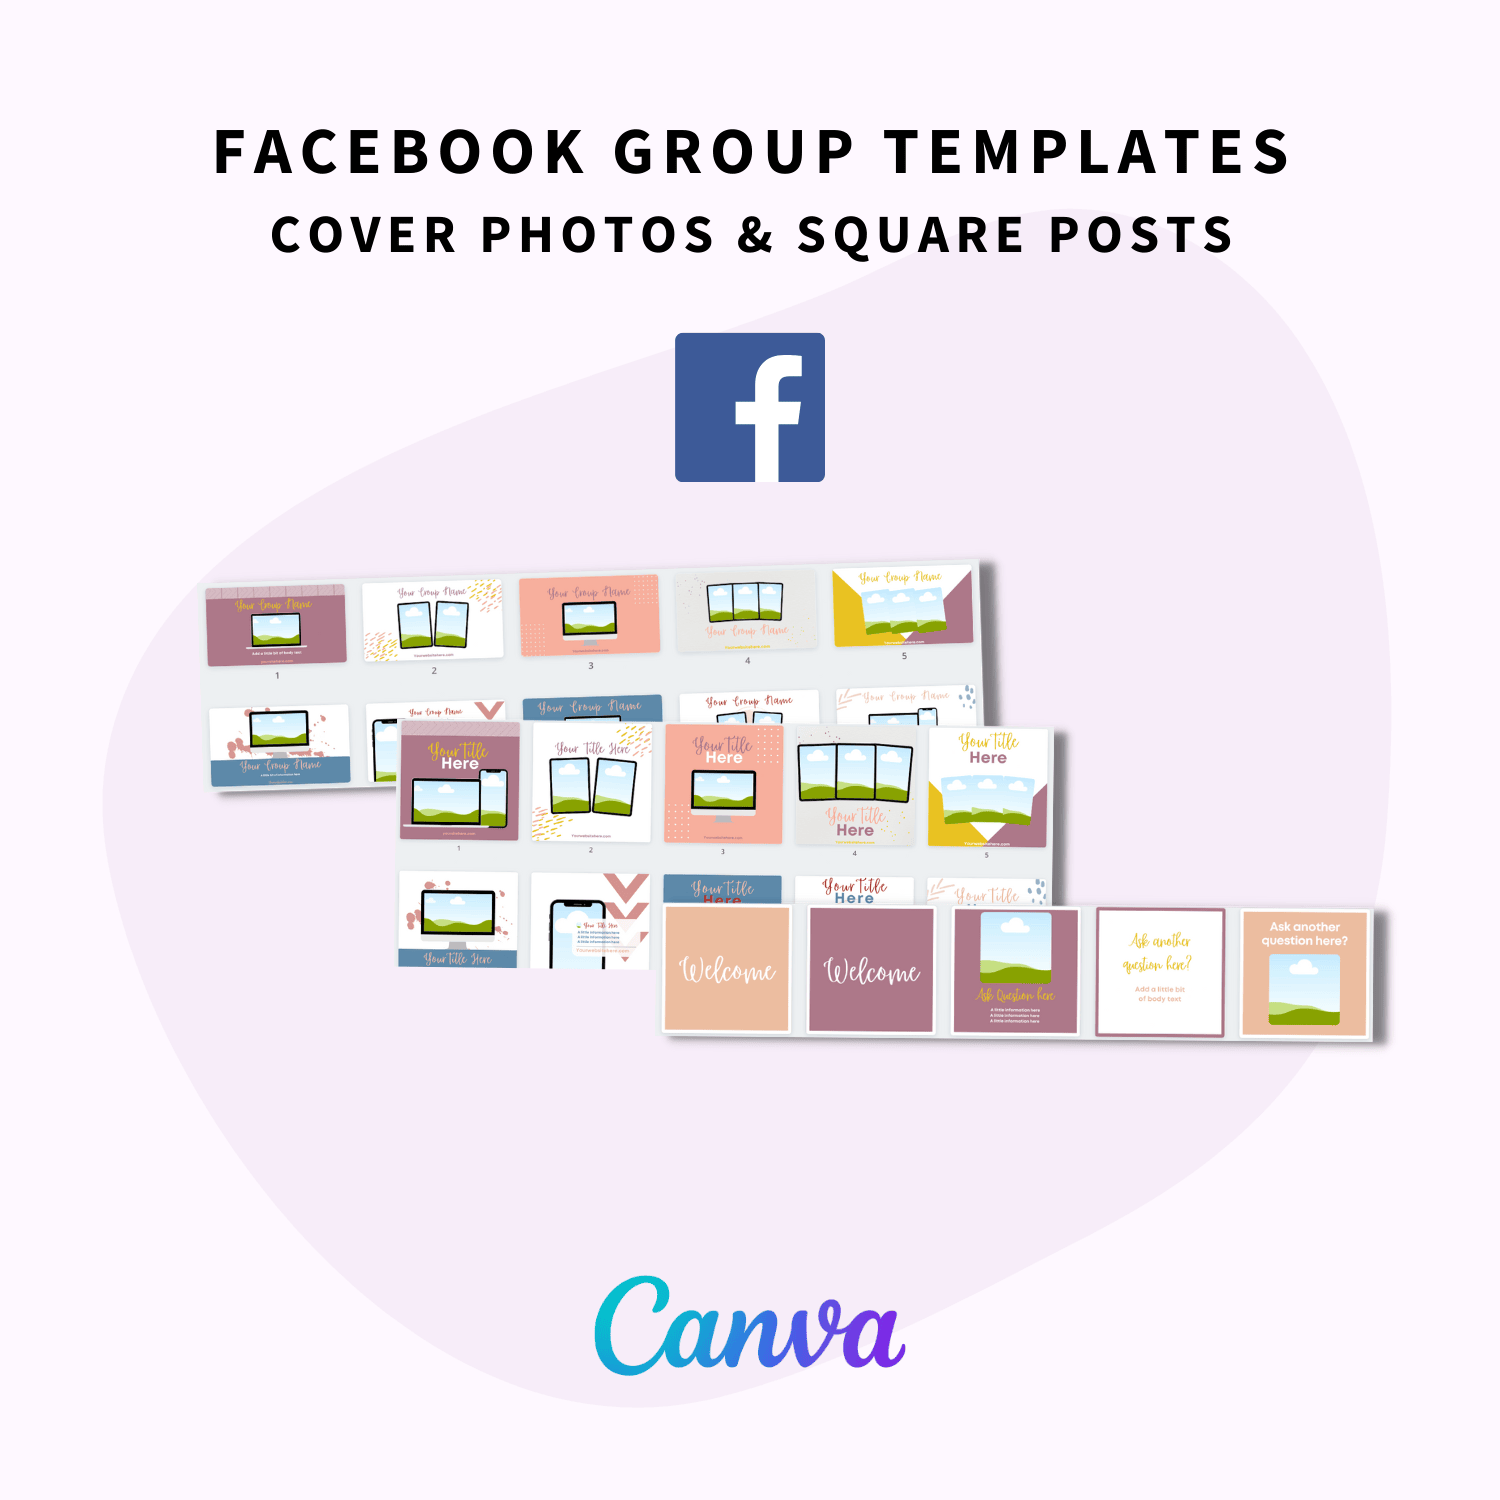 Facebook templates in the Social Media Super Bundle Toolbox